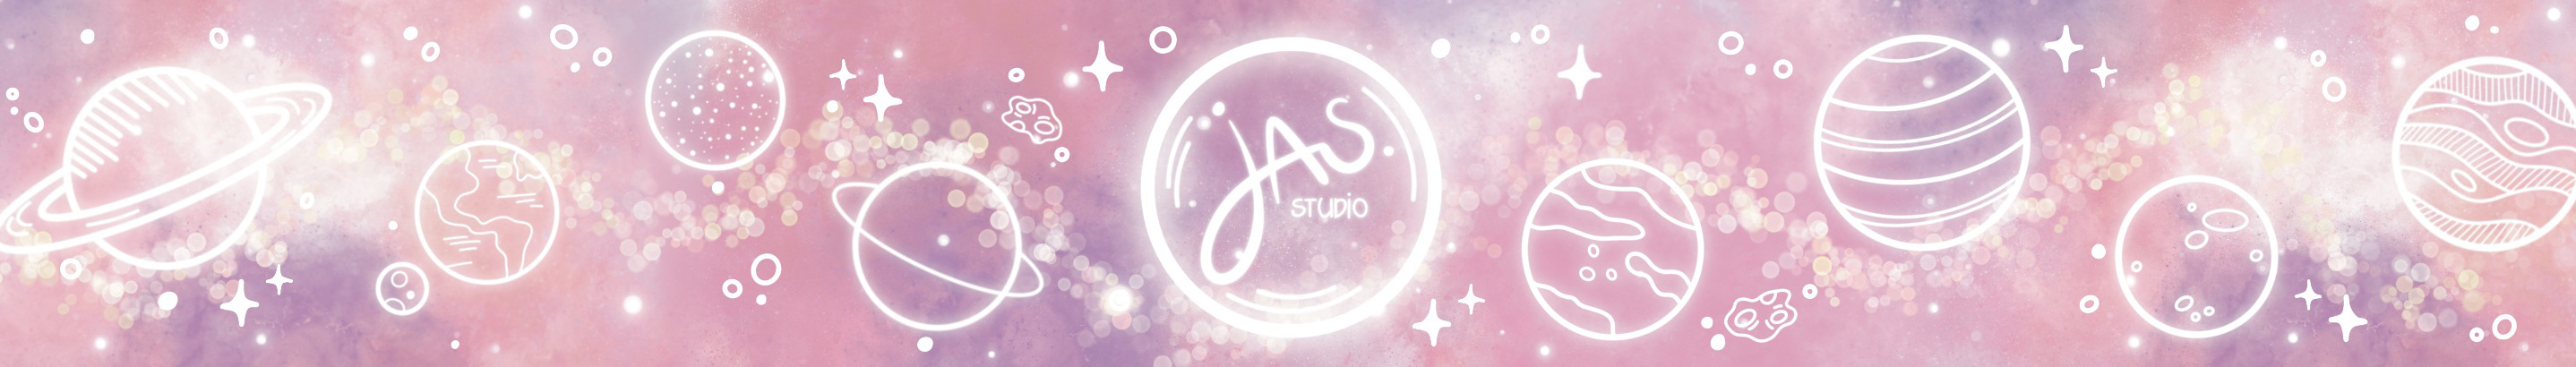 Jas. Studio's profile banner